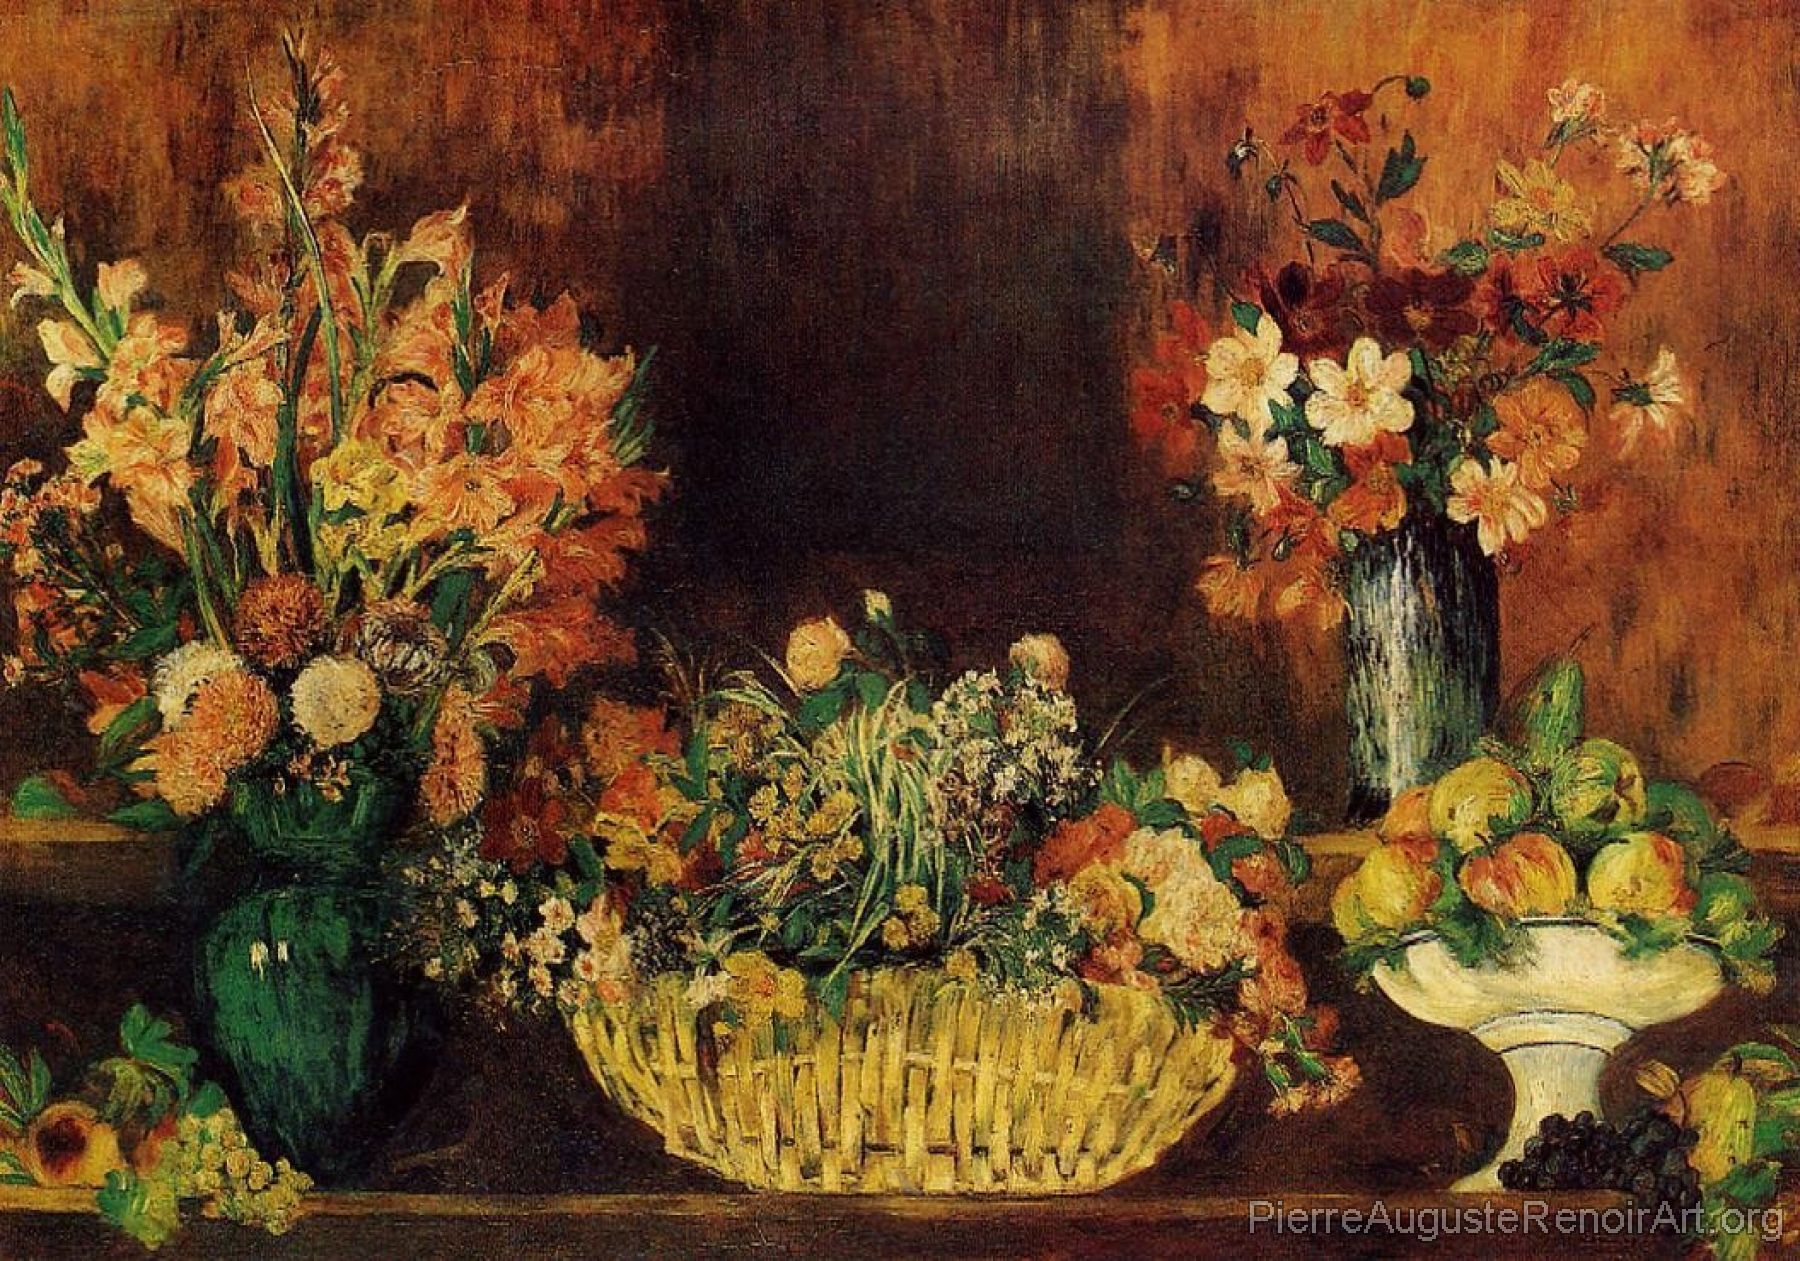 Vase, Basket of Flowers and Fruit